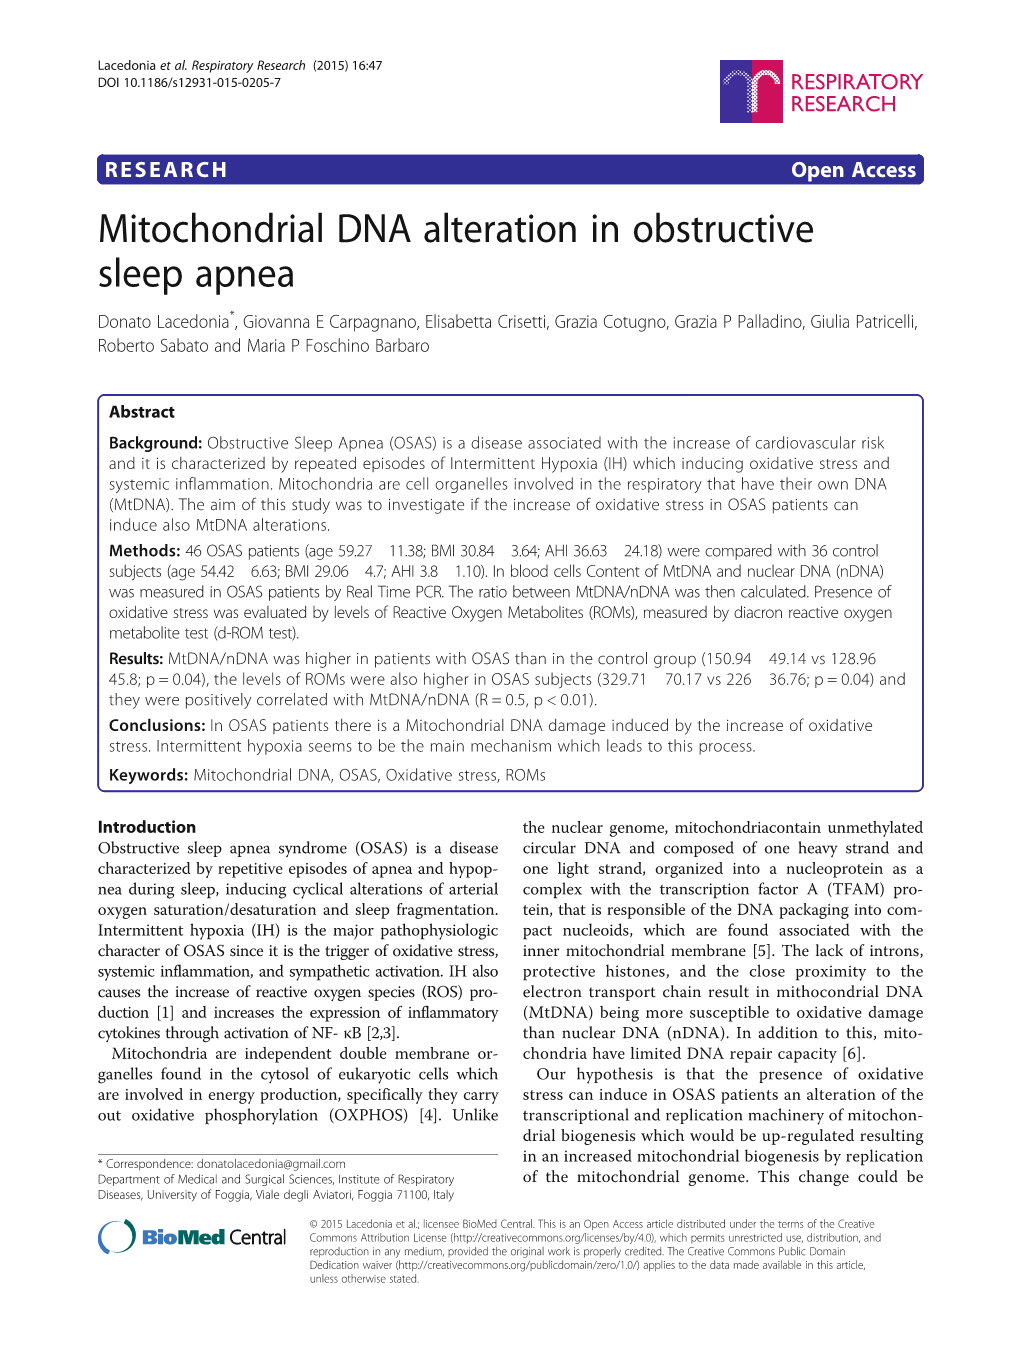 Mitochondrial DNA Alteration in Obstructive Sleep Apnea